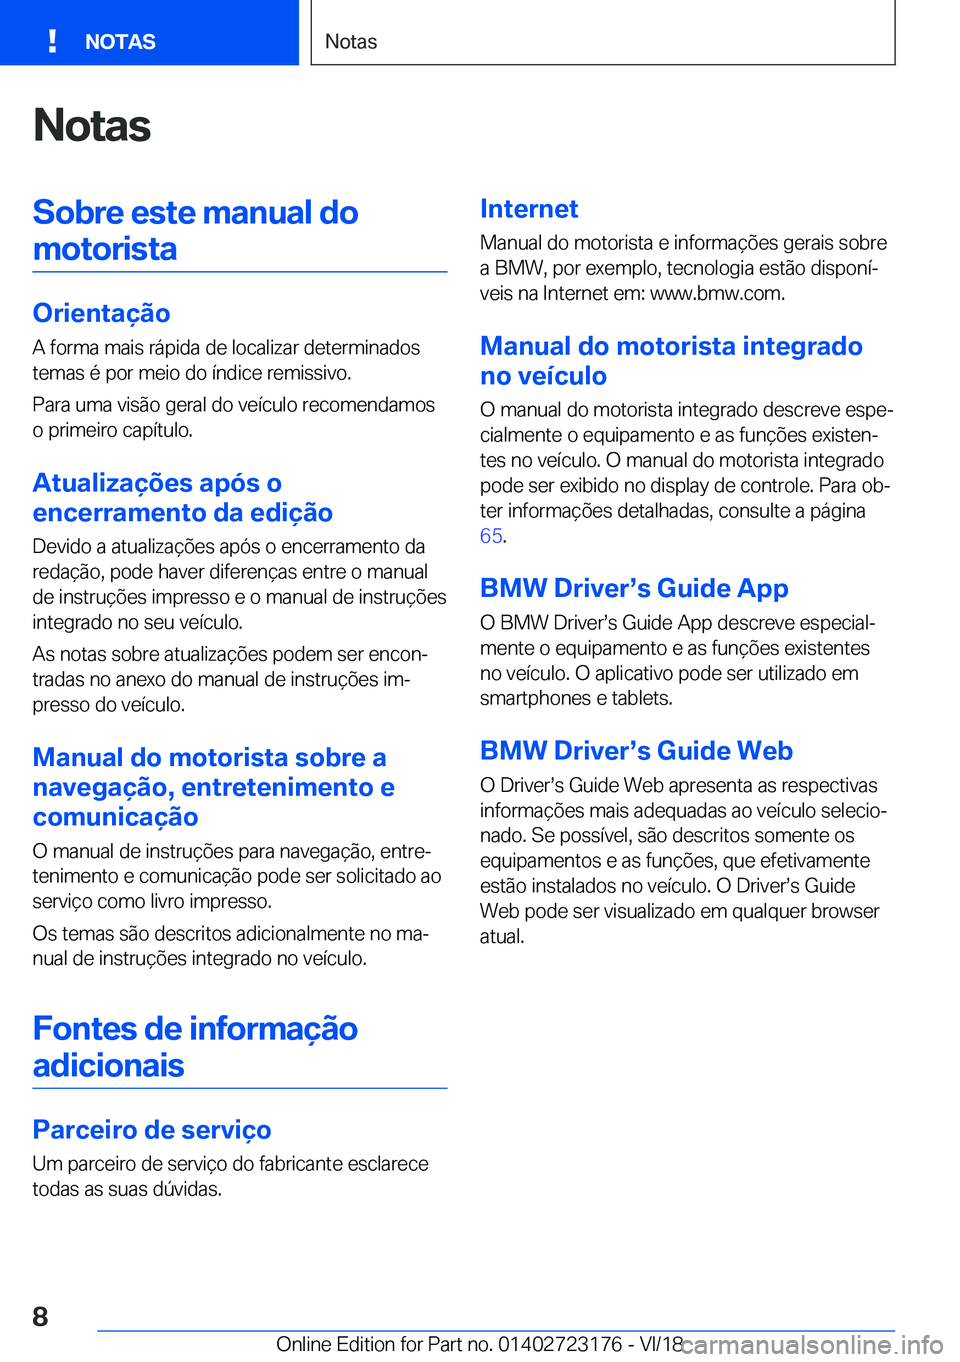 BMW 4 SERIES COUPE 2019  Manual do condutor (in Portuguese) �N�o�t�a�s�S�o�b�r�e��e�s�t�e��m�a�n�u�a�l��d�o�m�o�t�o�r�i�s�t�a
�O�r�i�e�n�t�a�